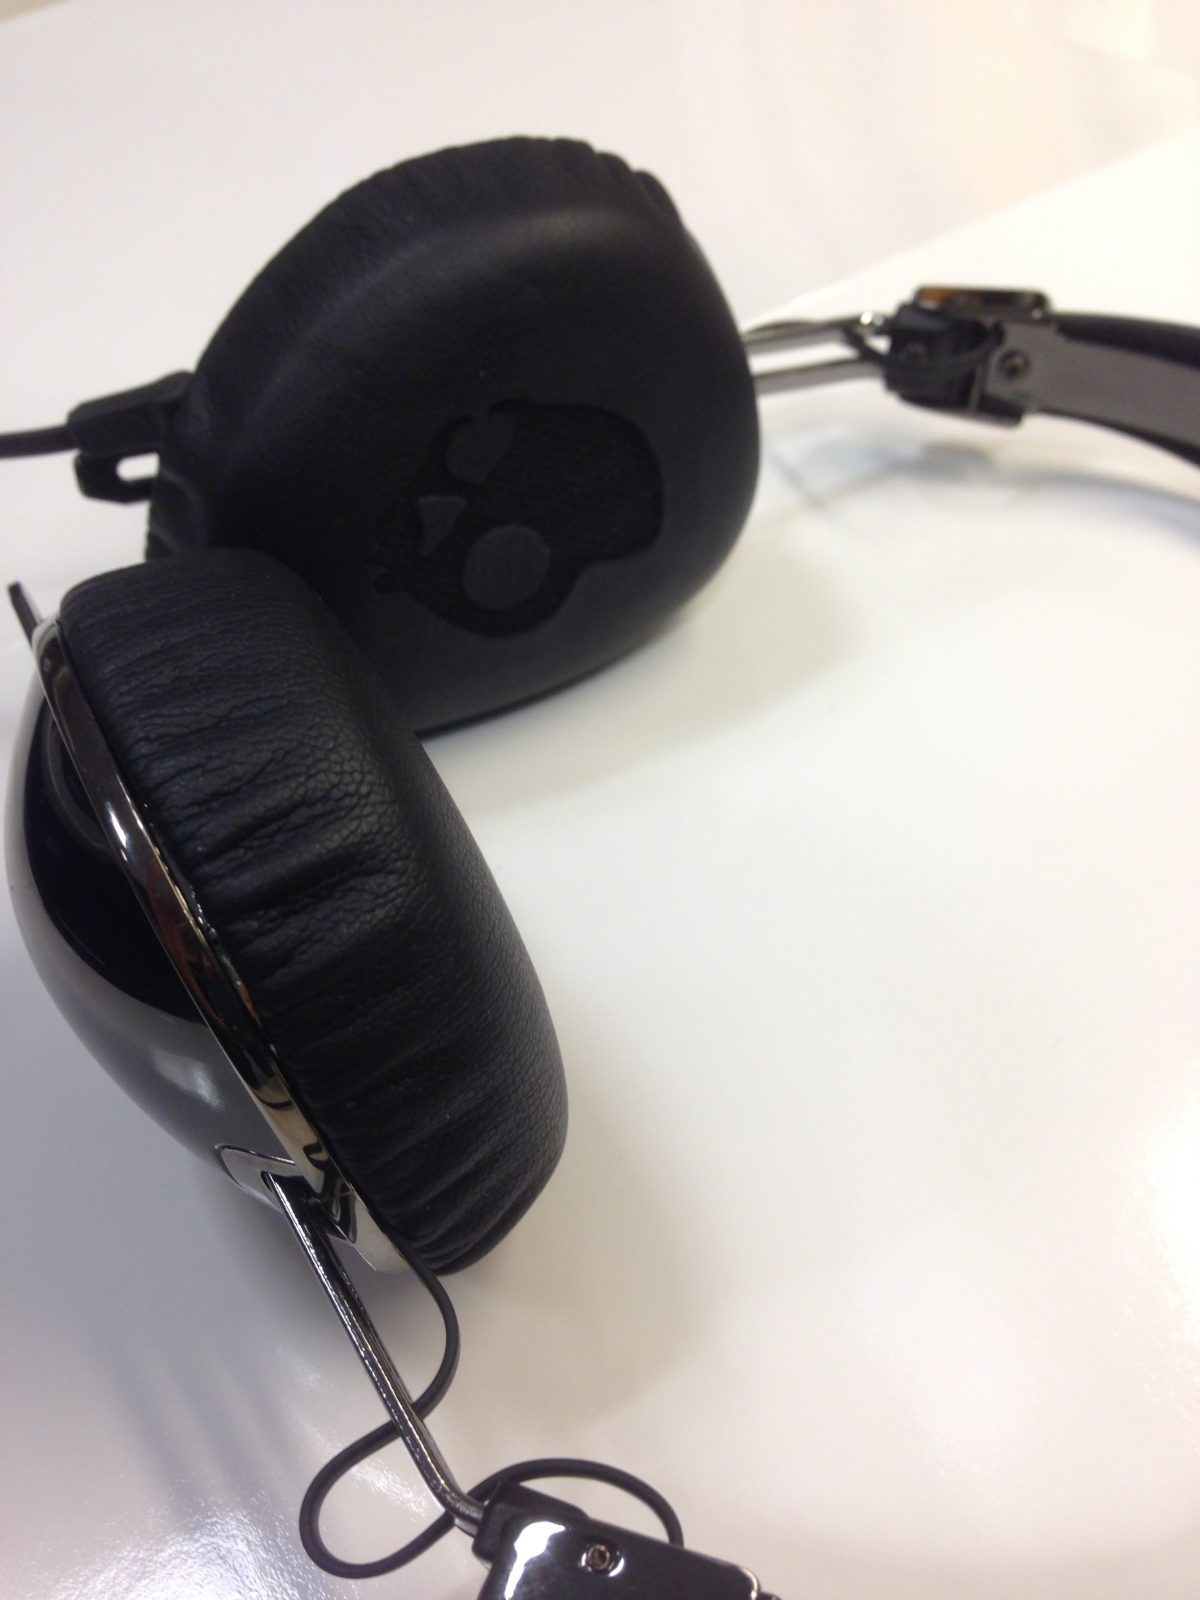 Skullcandy Navigator On-Ear Headphones Review - Analie Cruz - Tech We Like - Side view